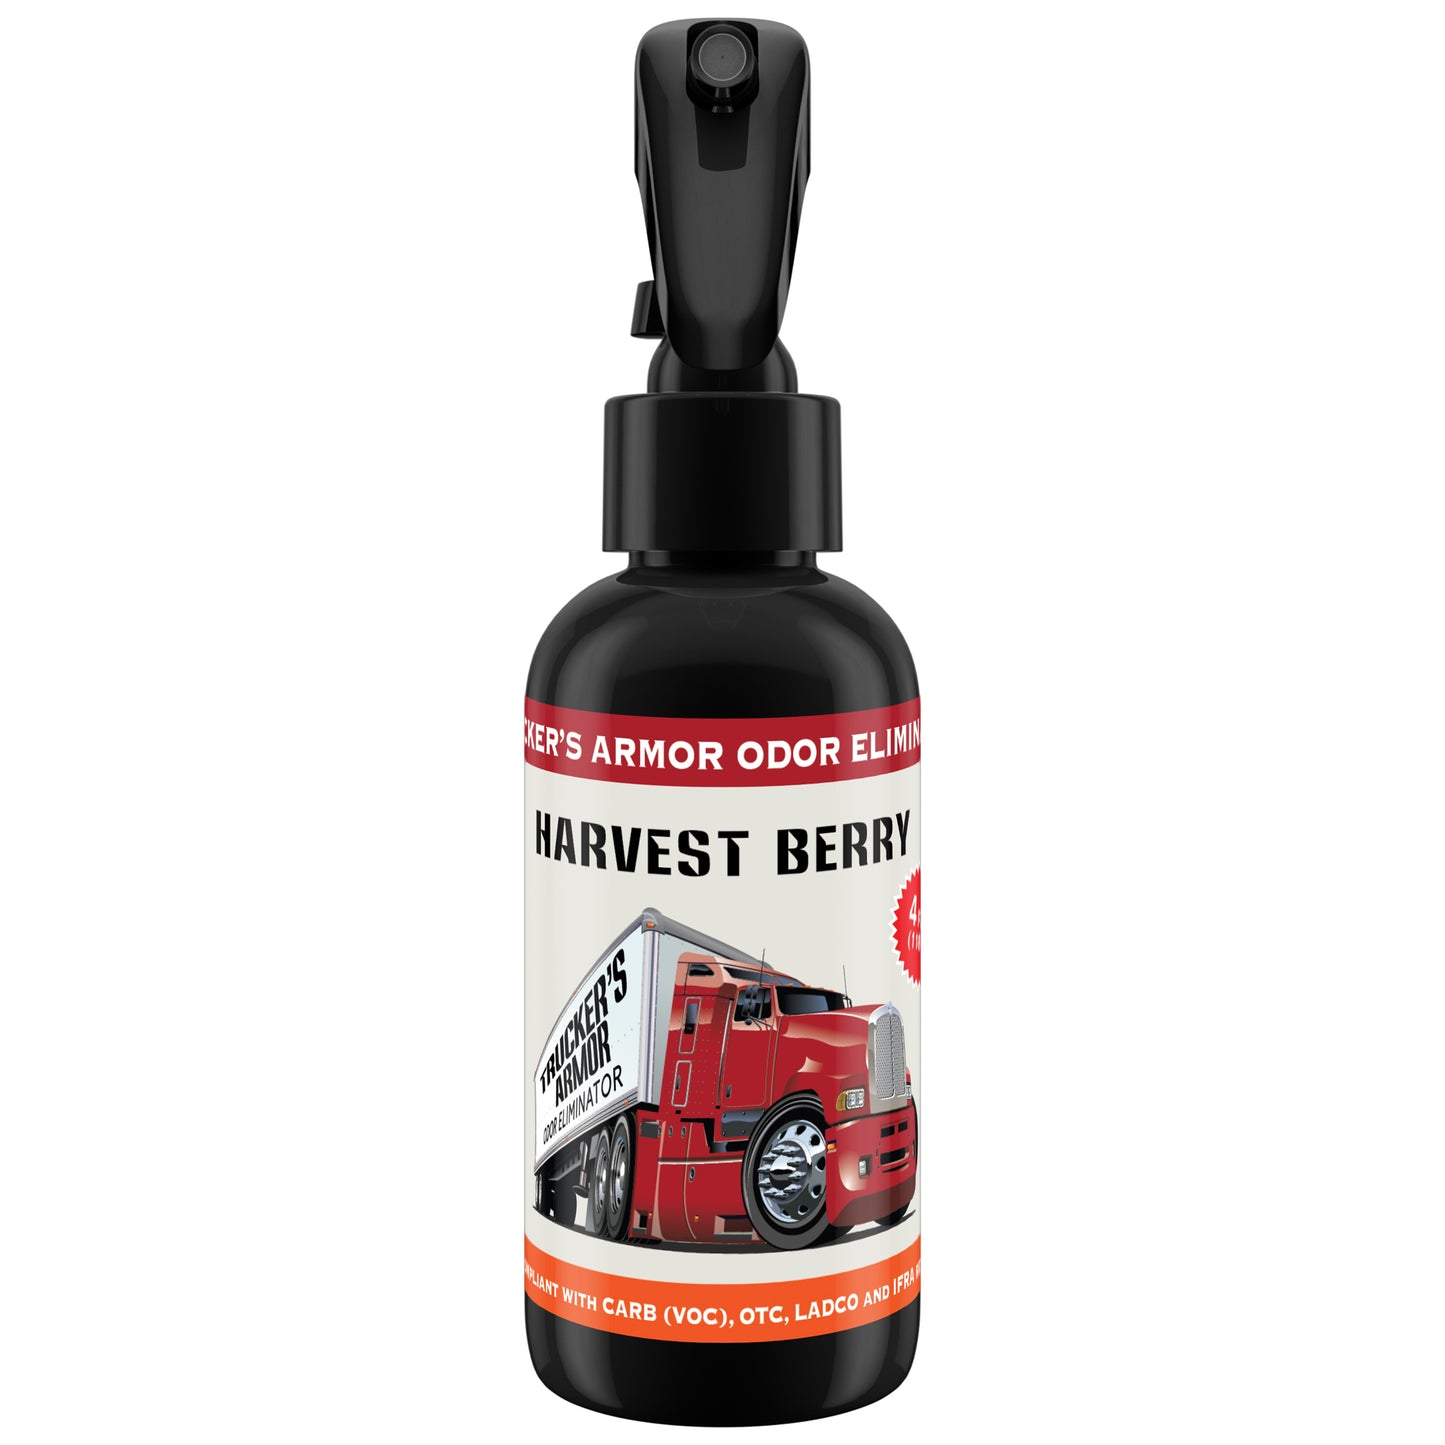 Trucker's Armor Odor Eliminator - Harvest Berry Scent